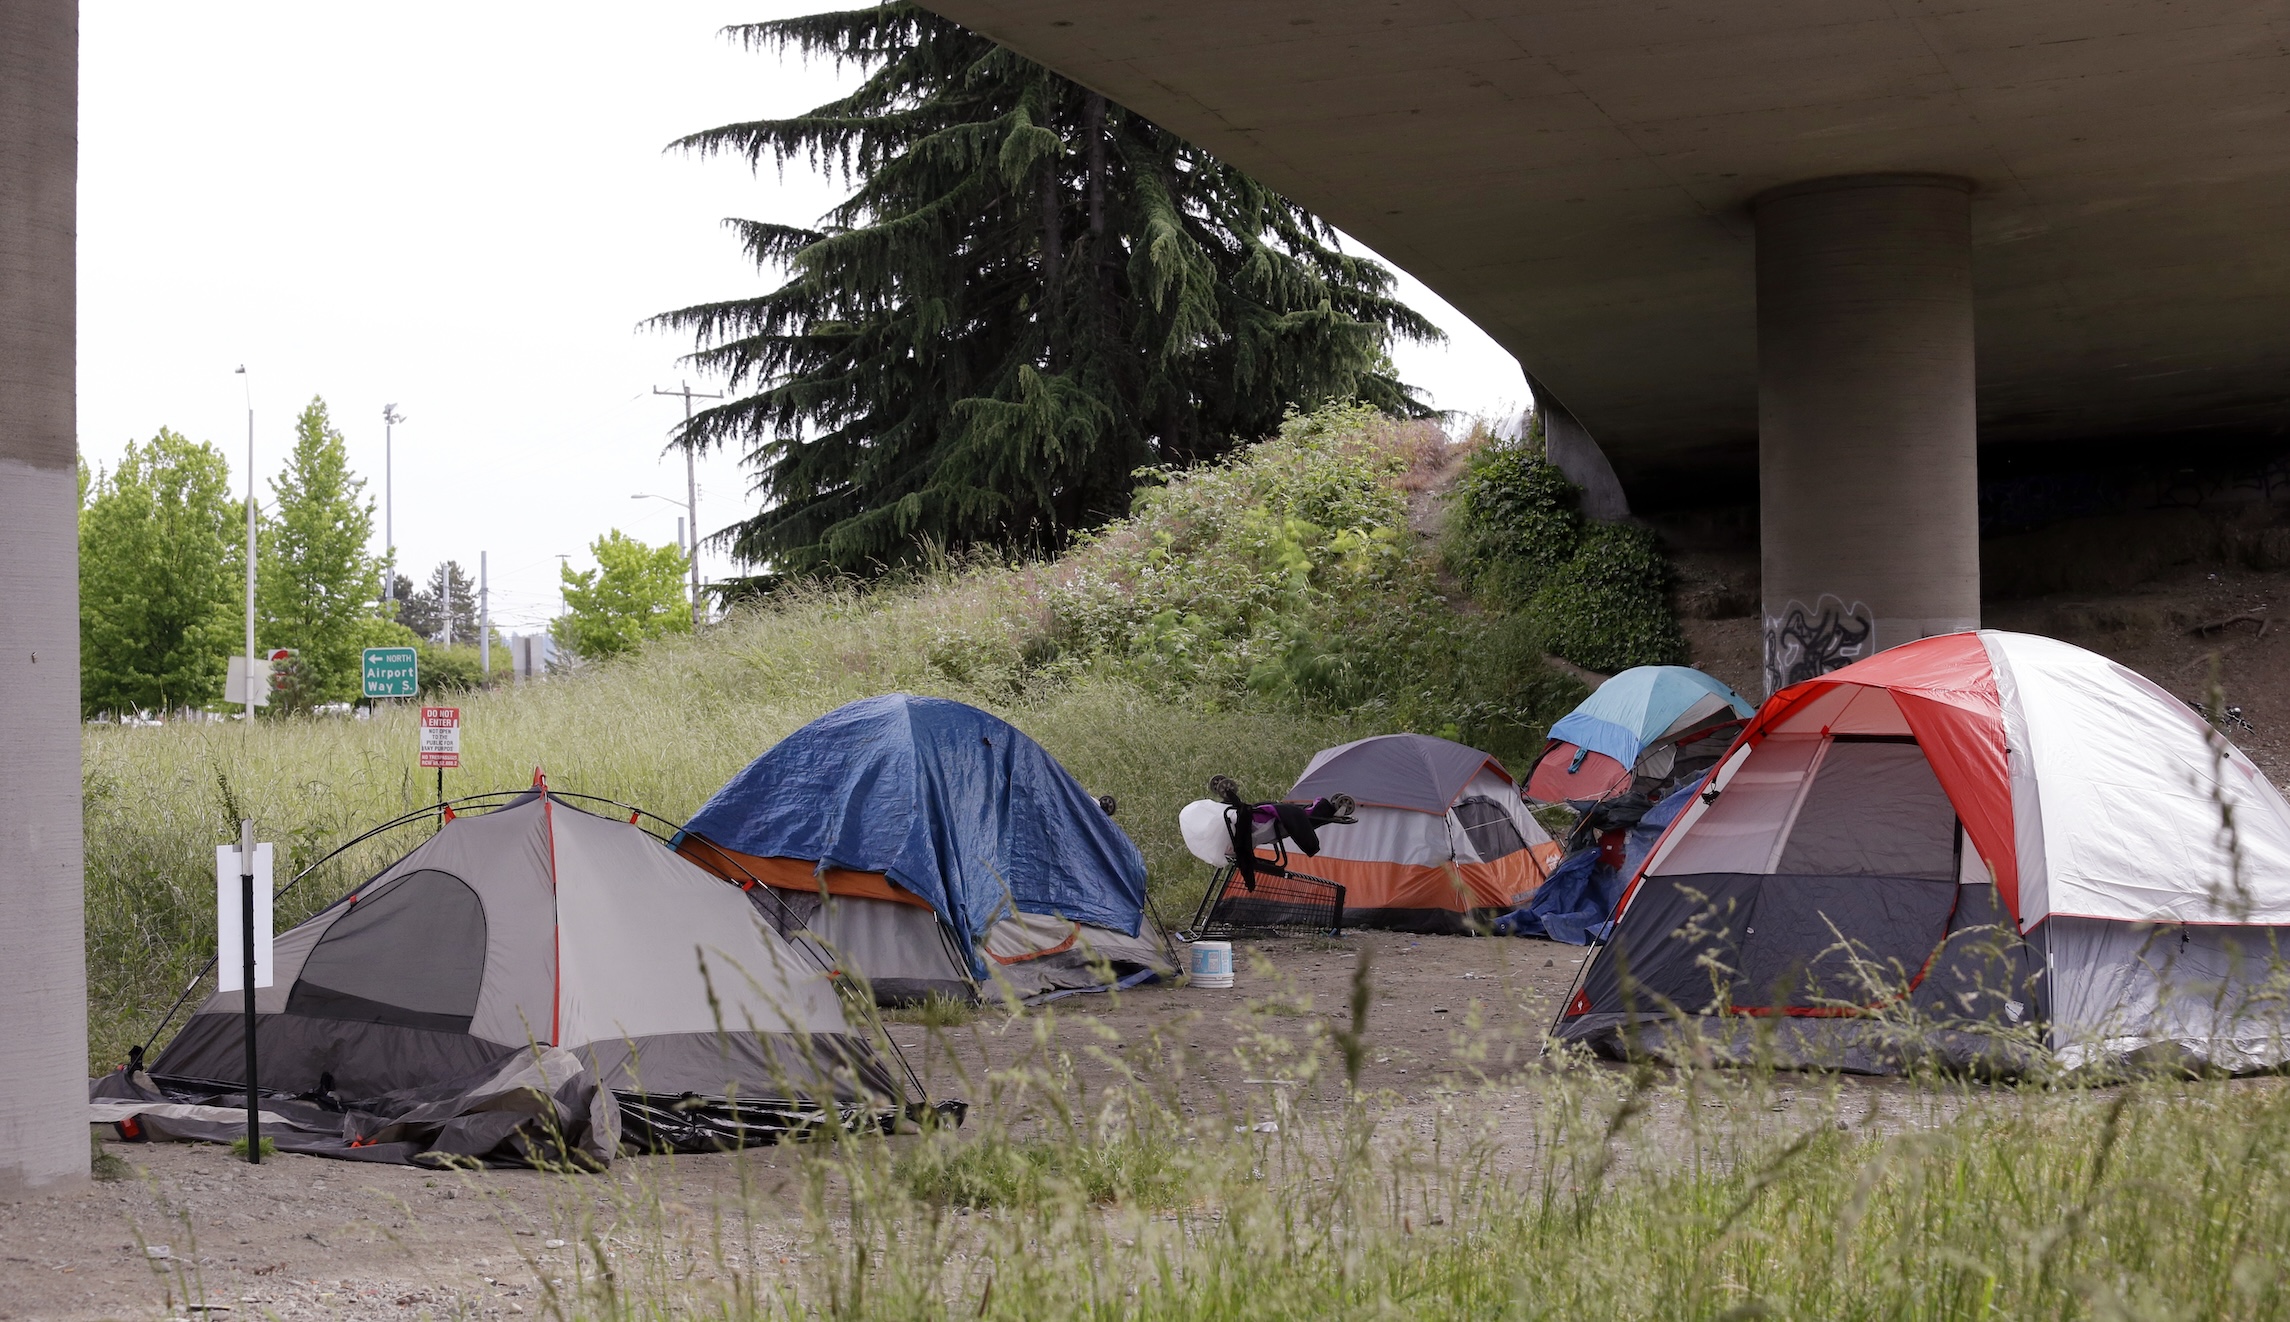 Seattle-area sheriff calls on police force not to enforce city’s homeless encampment legislation